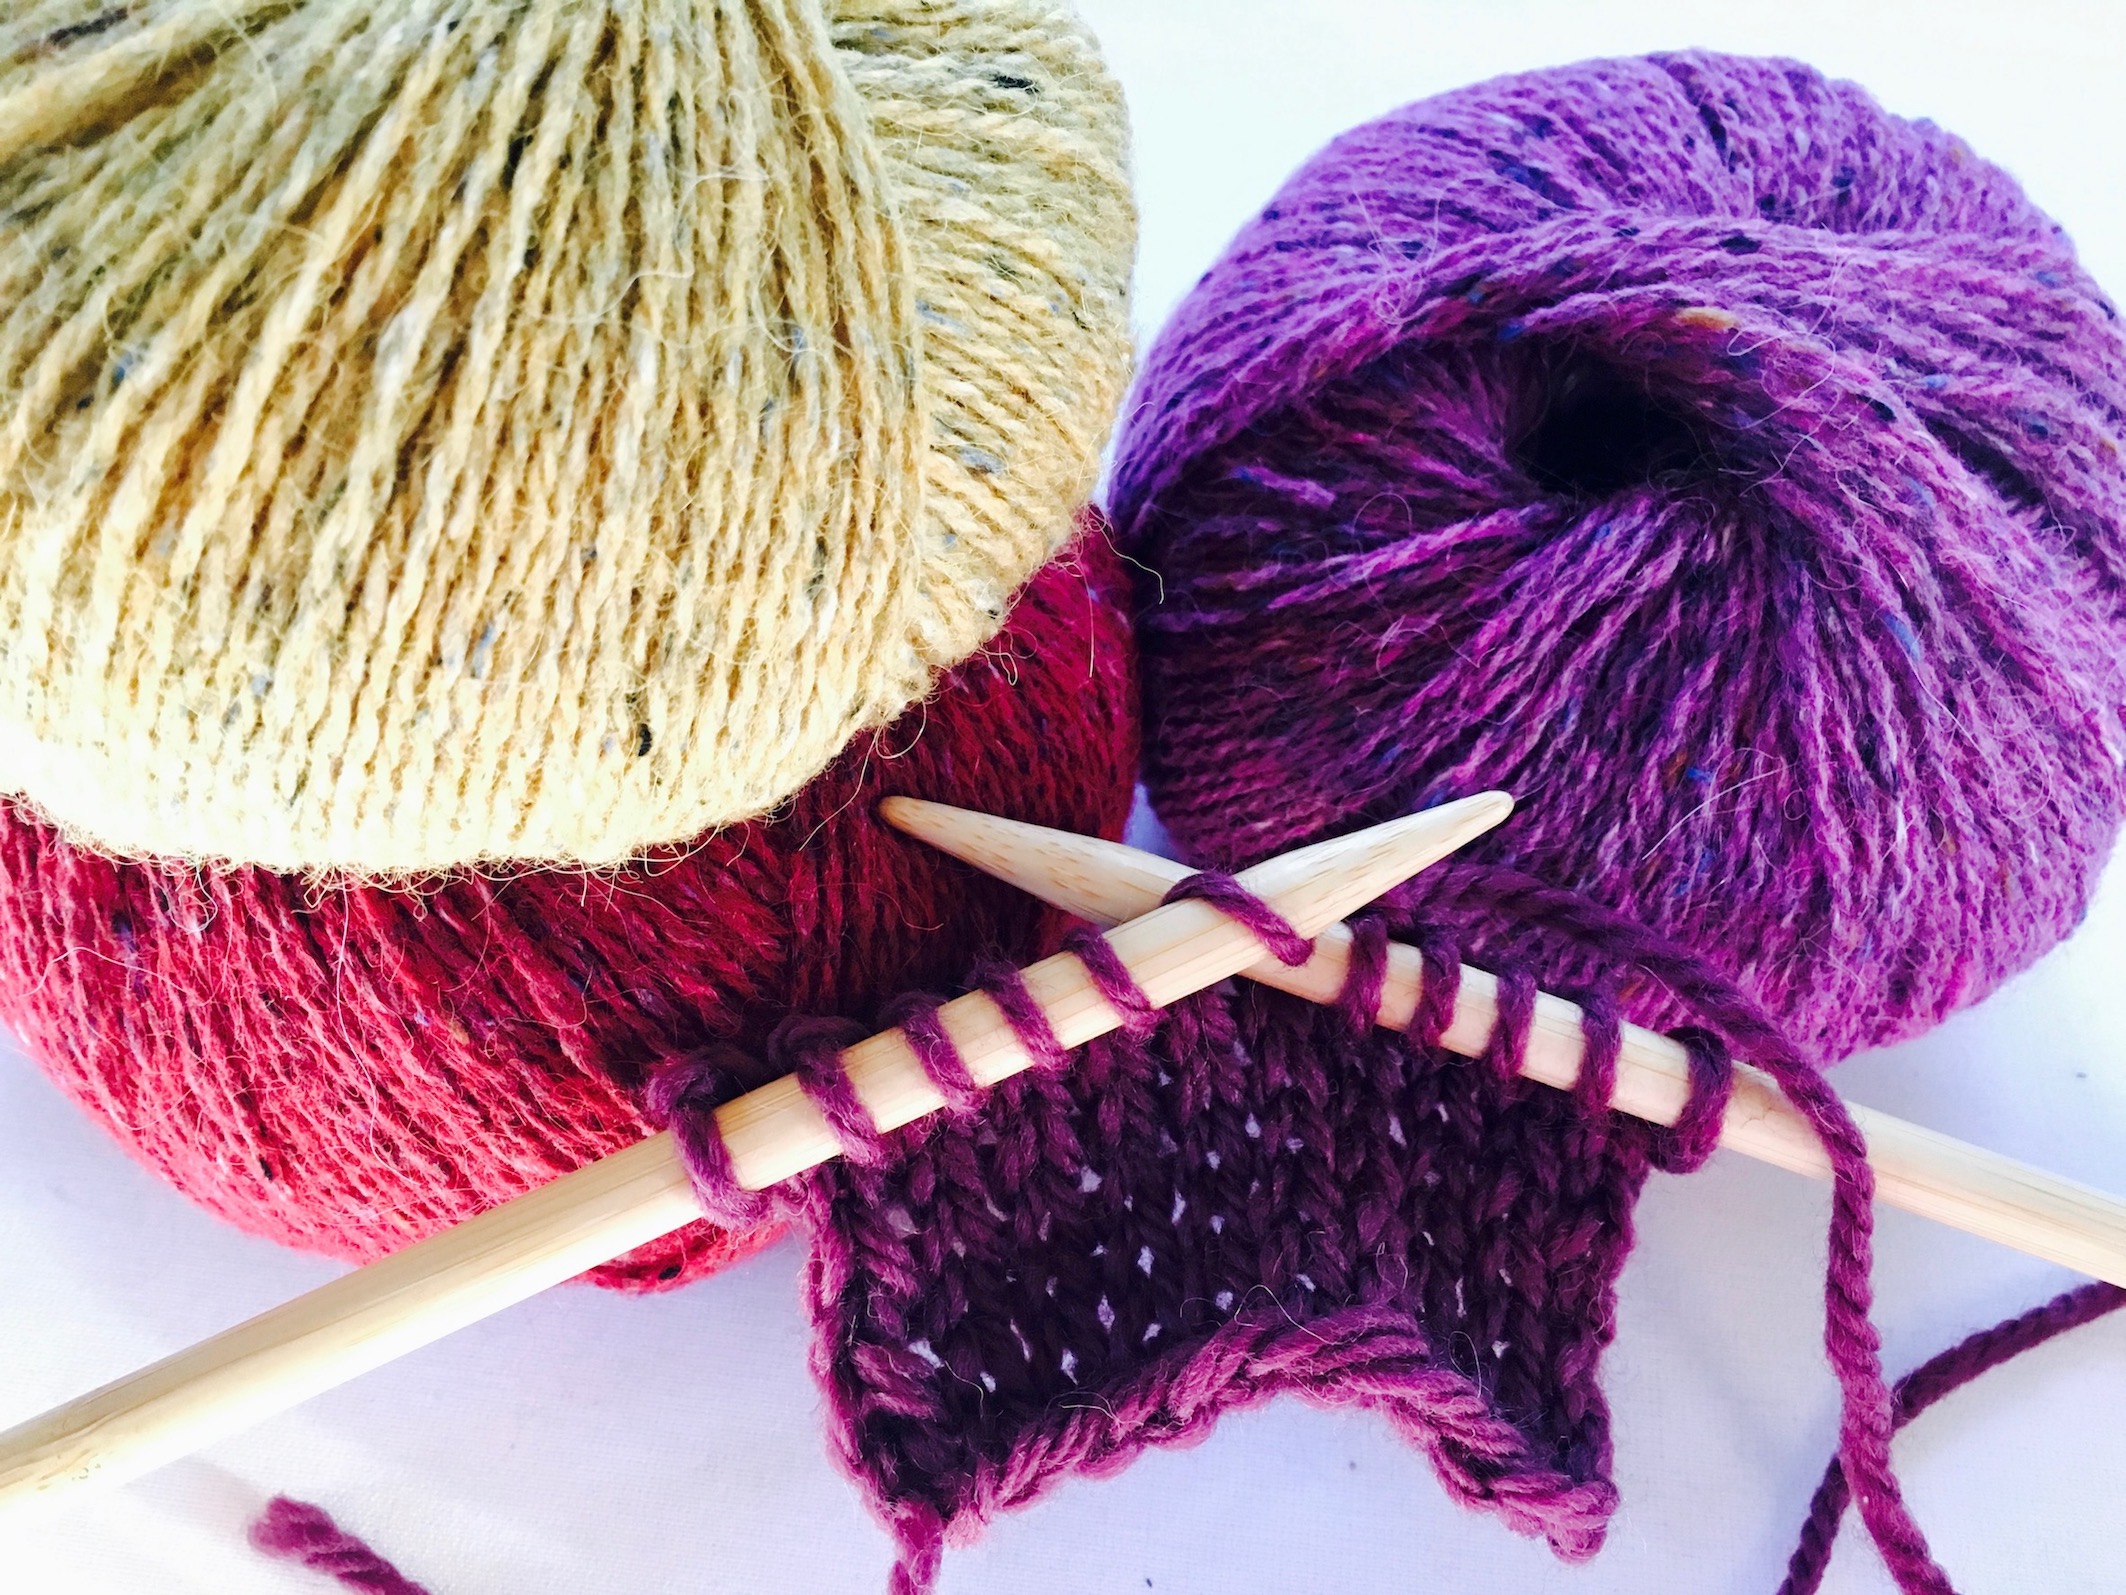 Dumbarton Knitting: baby items needed at QEU Hospital